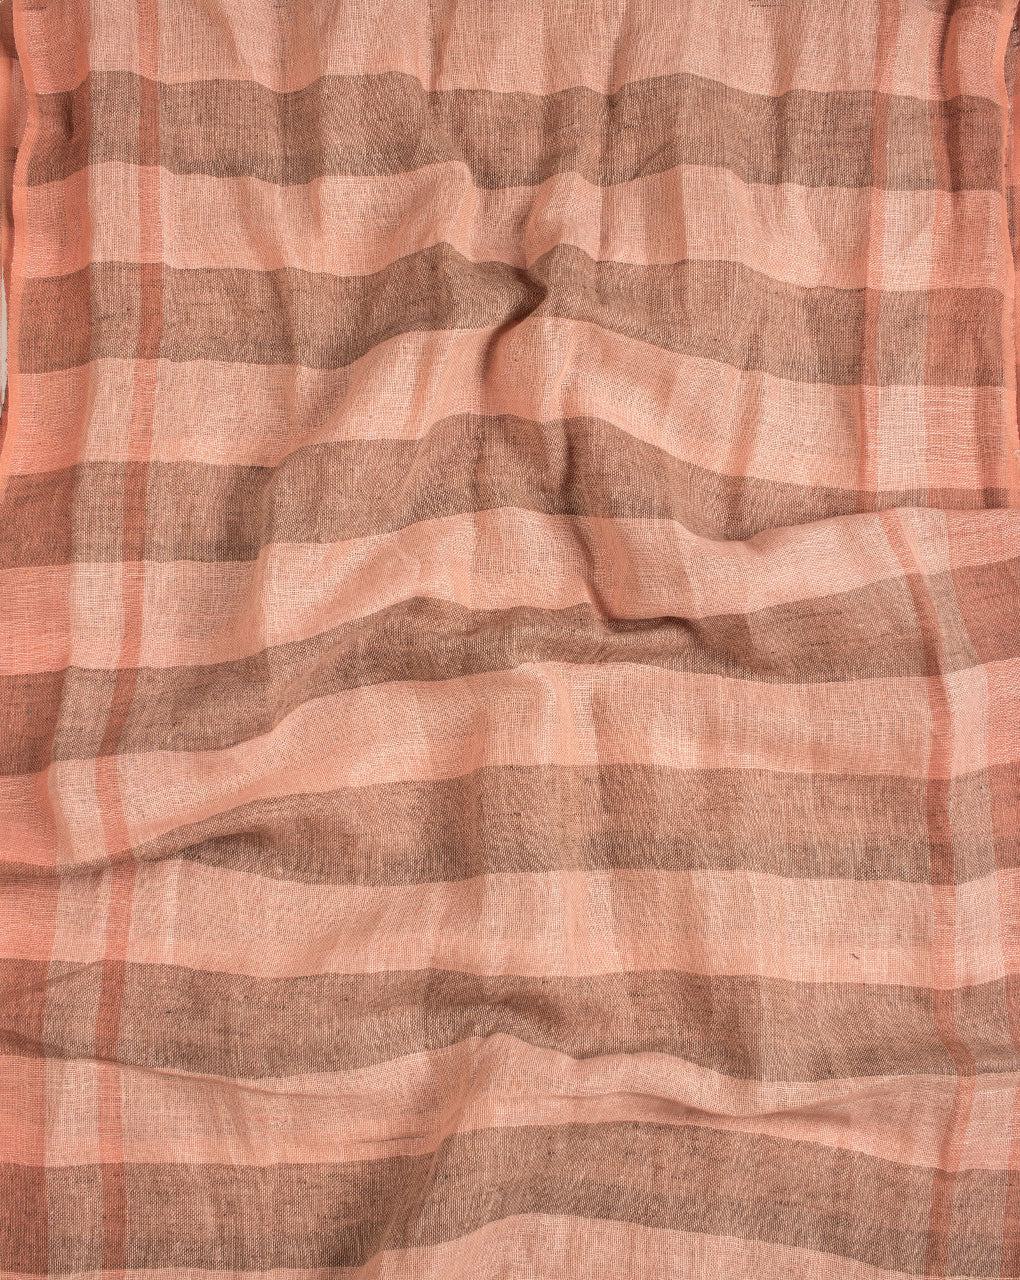 Brown Stripes Woven Bhagalpuri Cotton Stole - Fabriclore.com